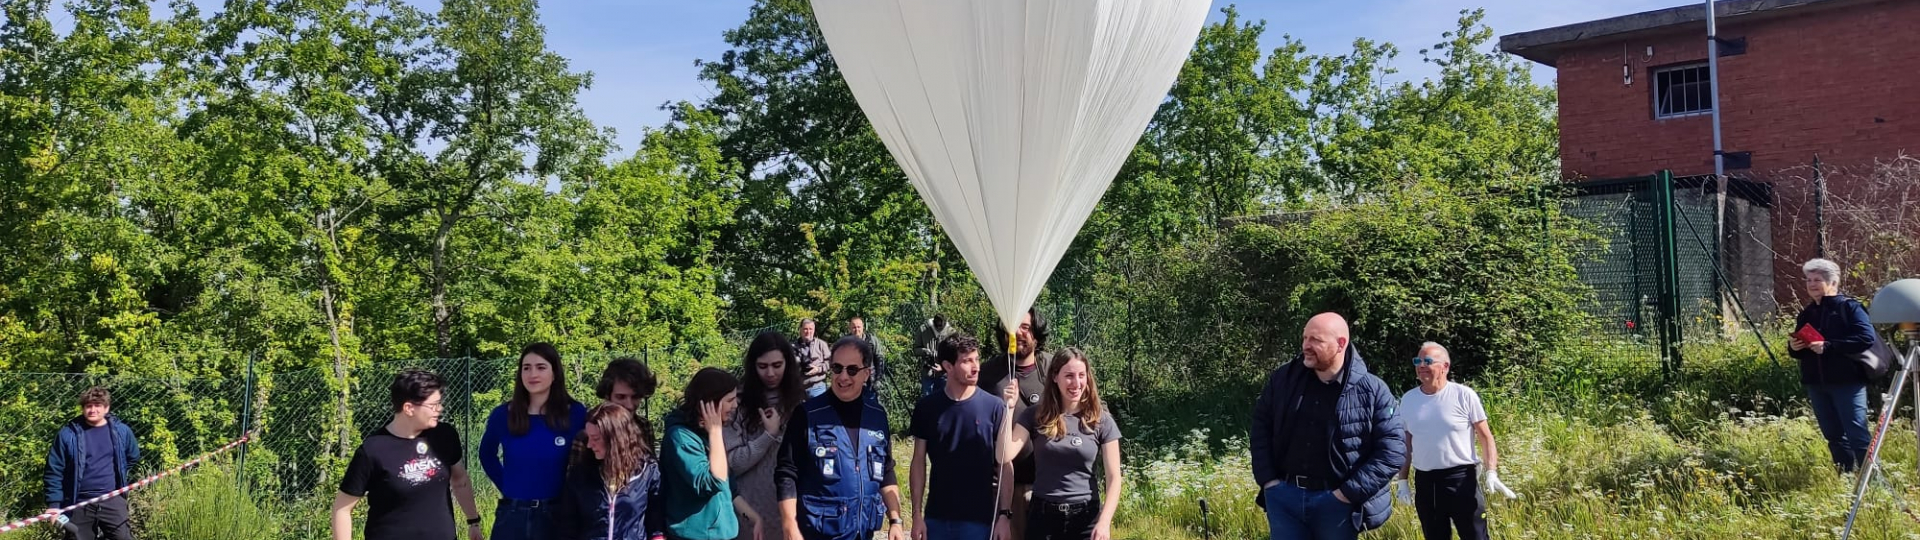 Stratospheric Balloon for Atmospheric Measurements